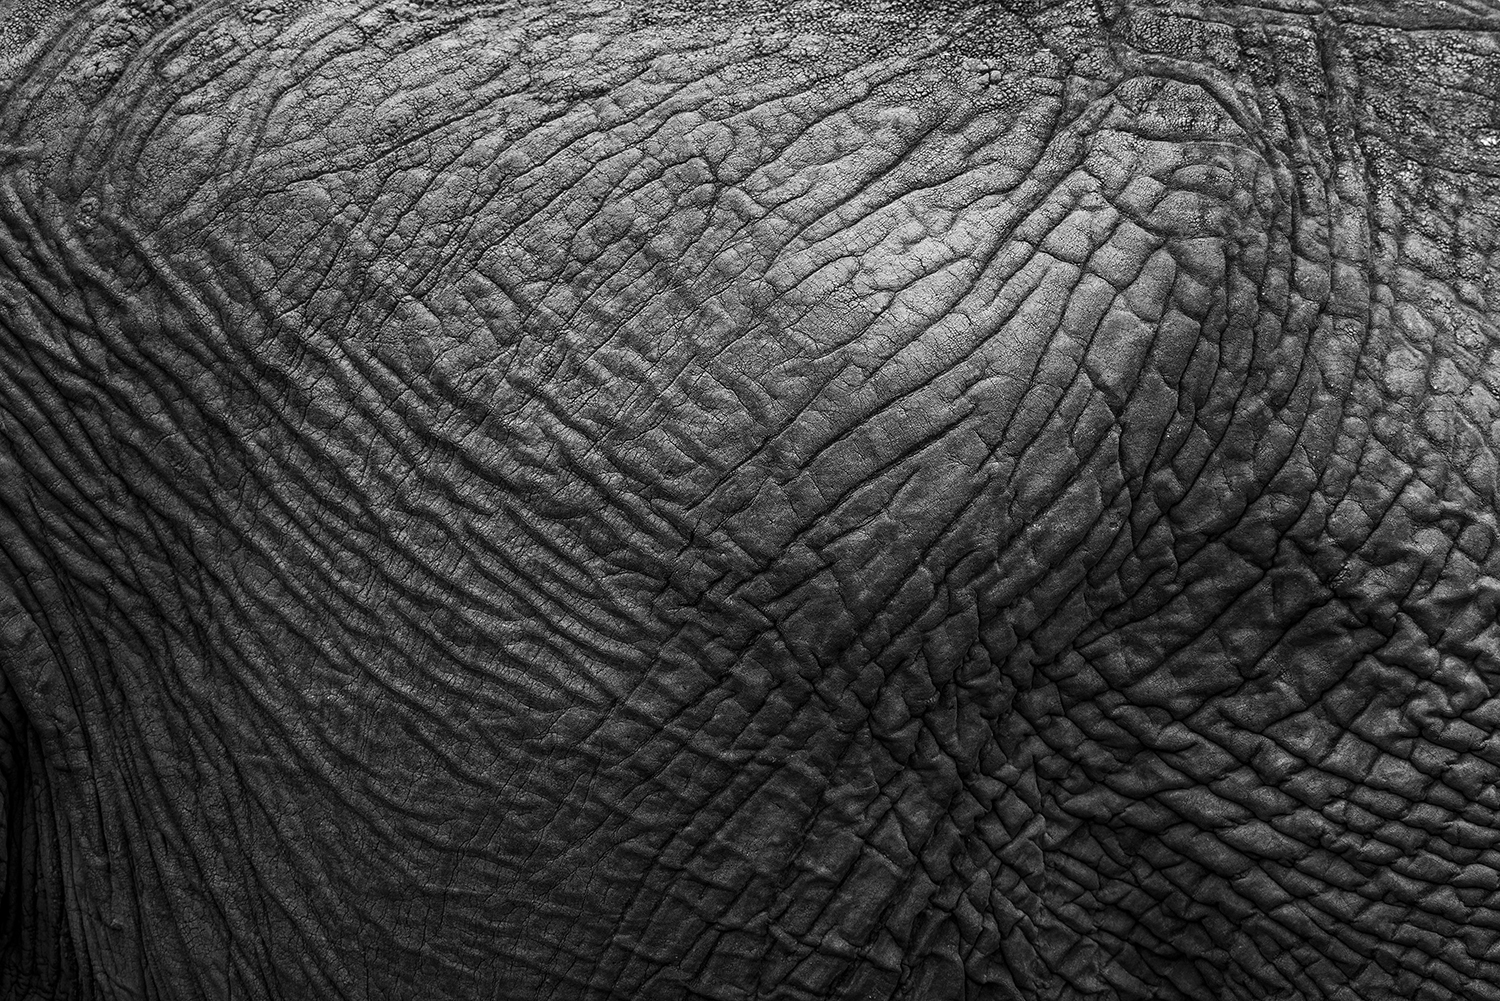 Elephant Skin texture